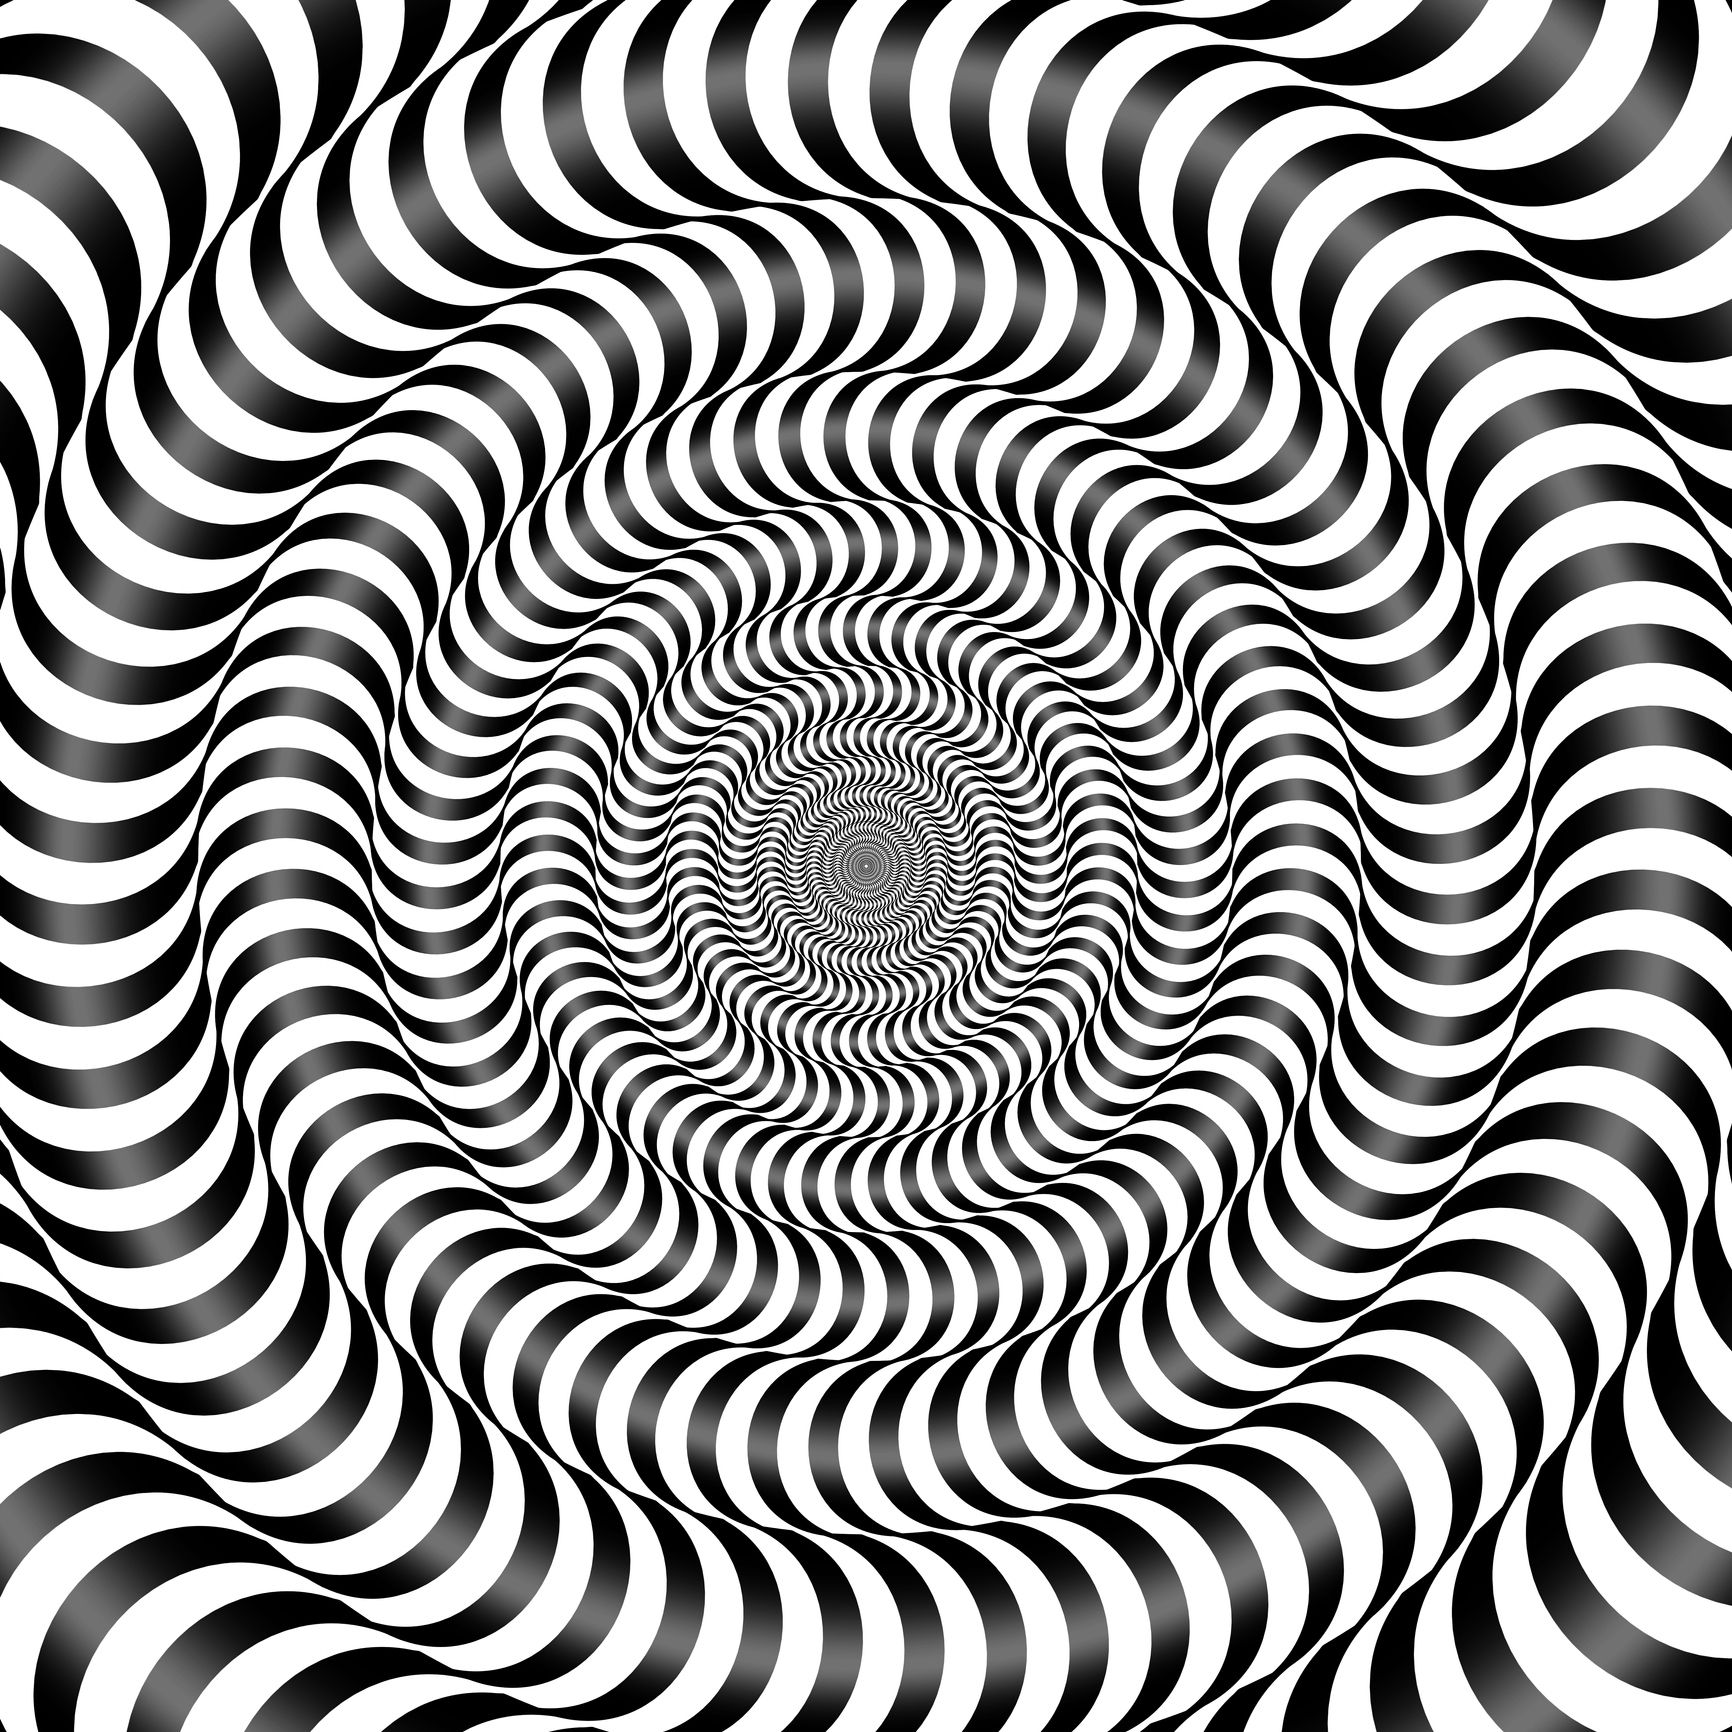 most amazing illusions ever